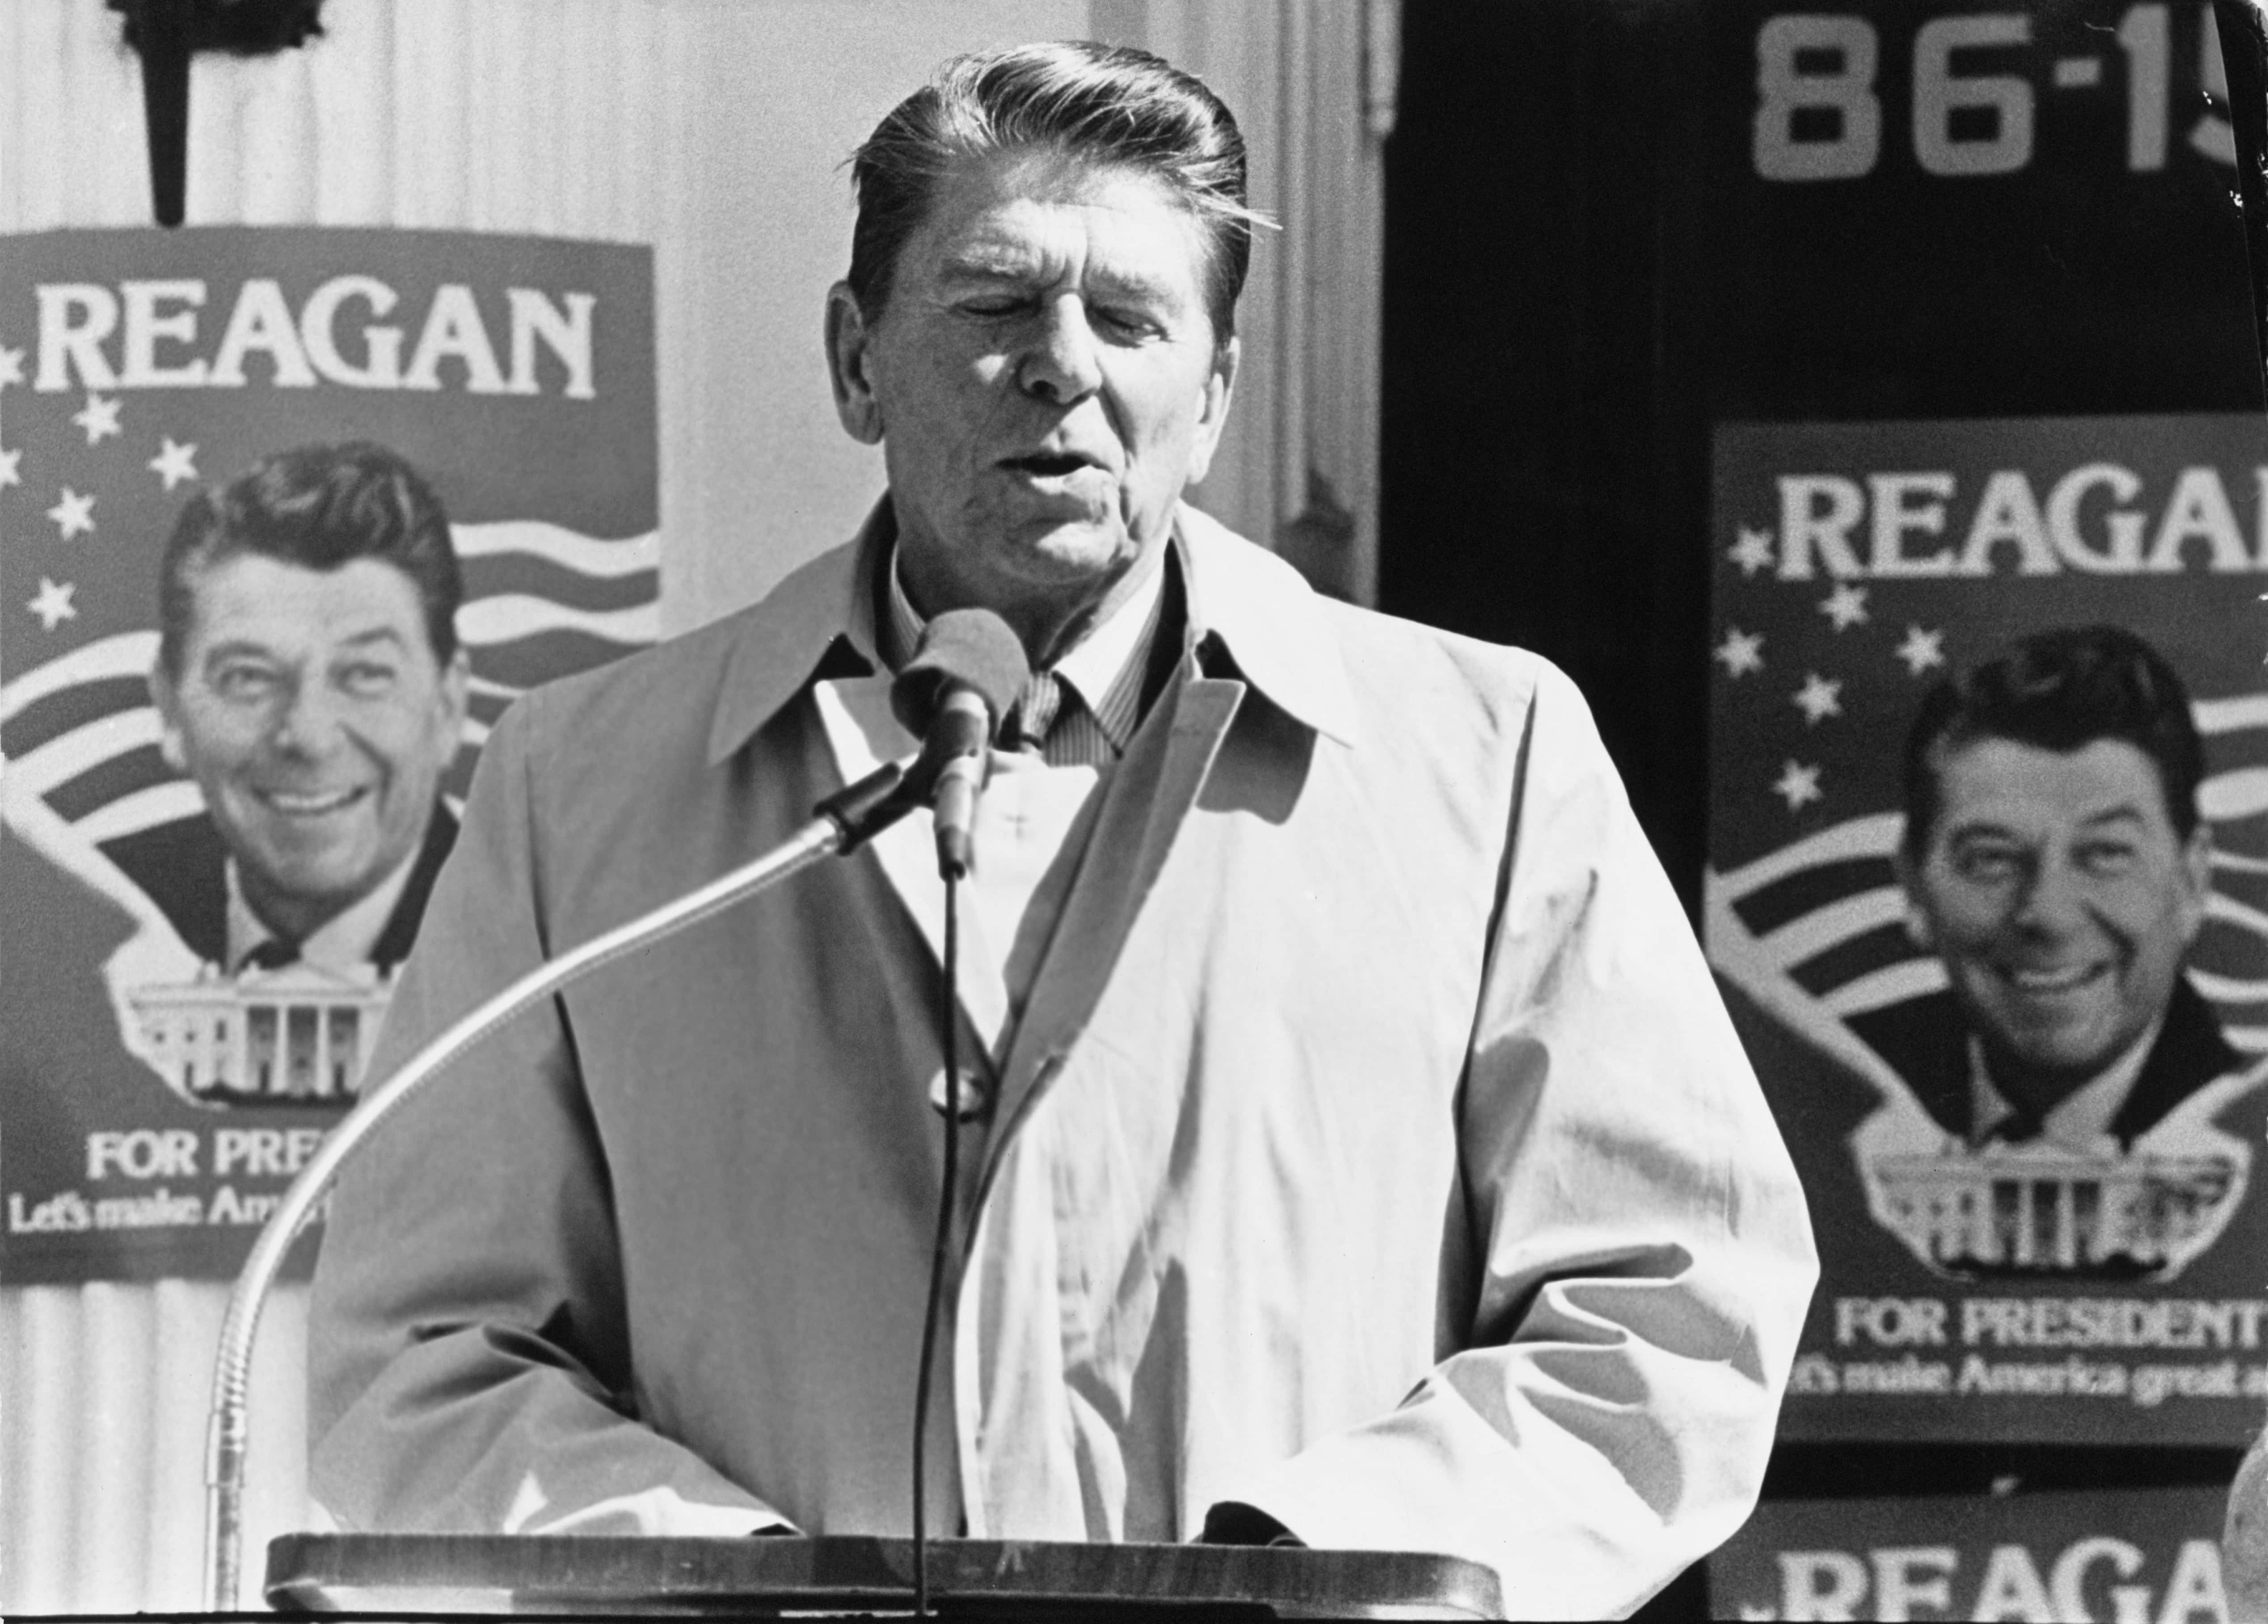 Reagan At New York Primary